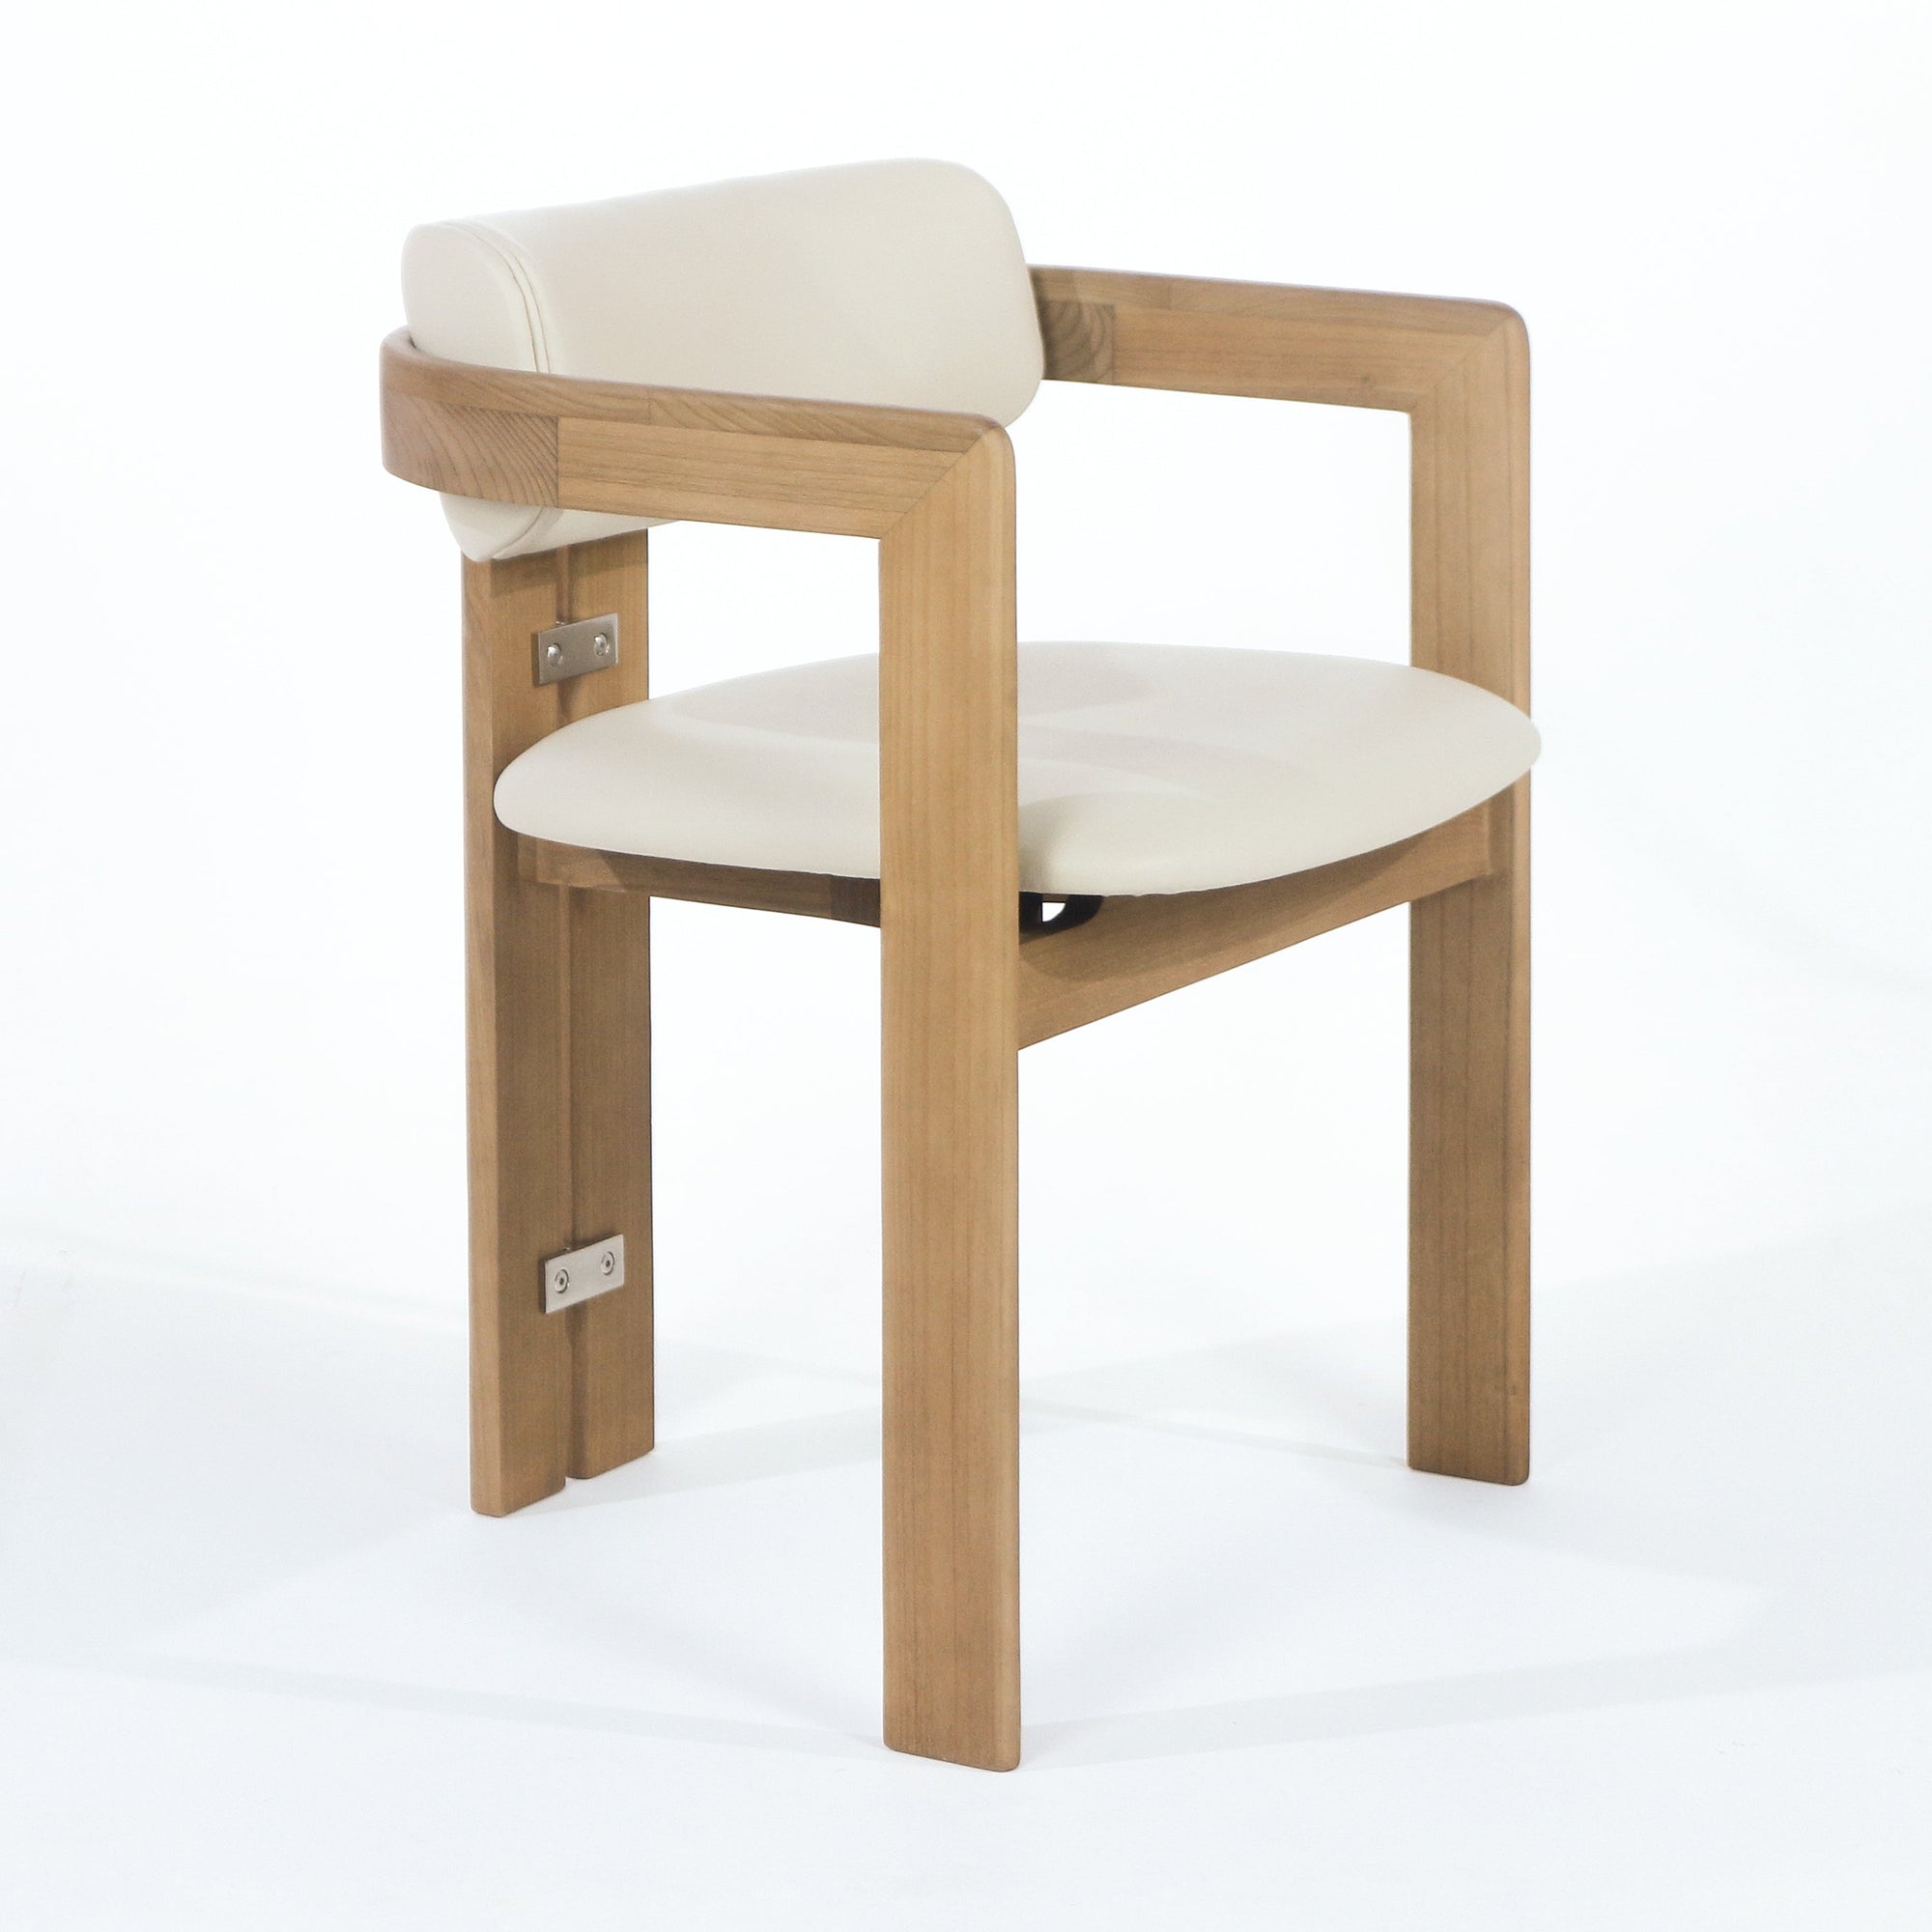 Pamplona Teak & Beige Leather Dining Chair - INTERIORTONIC